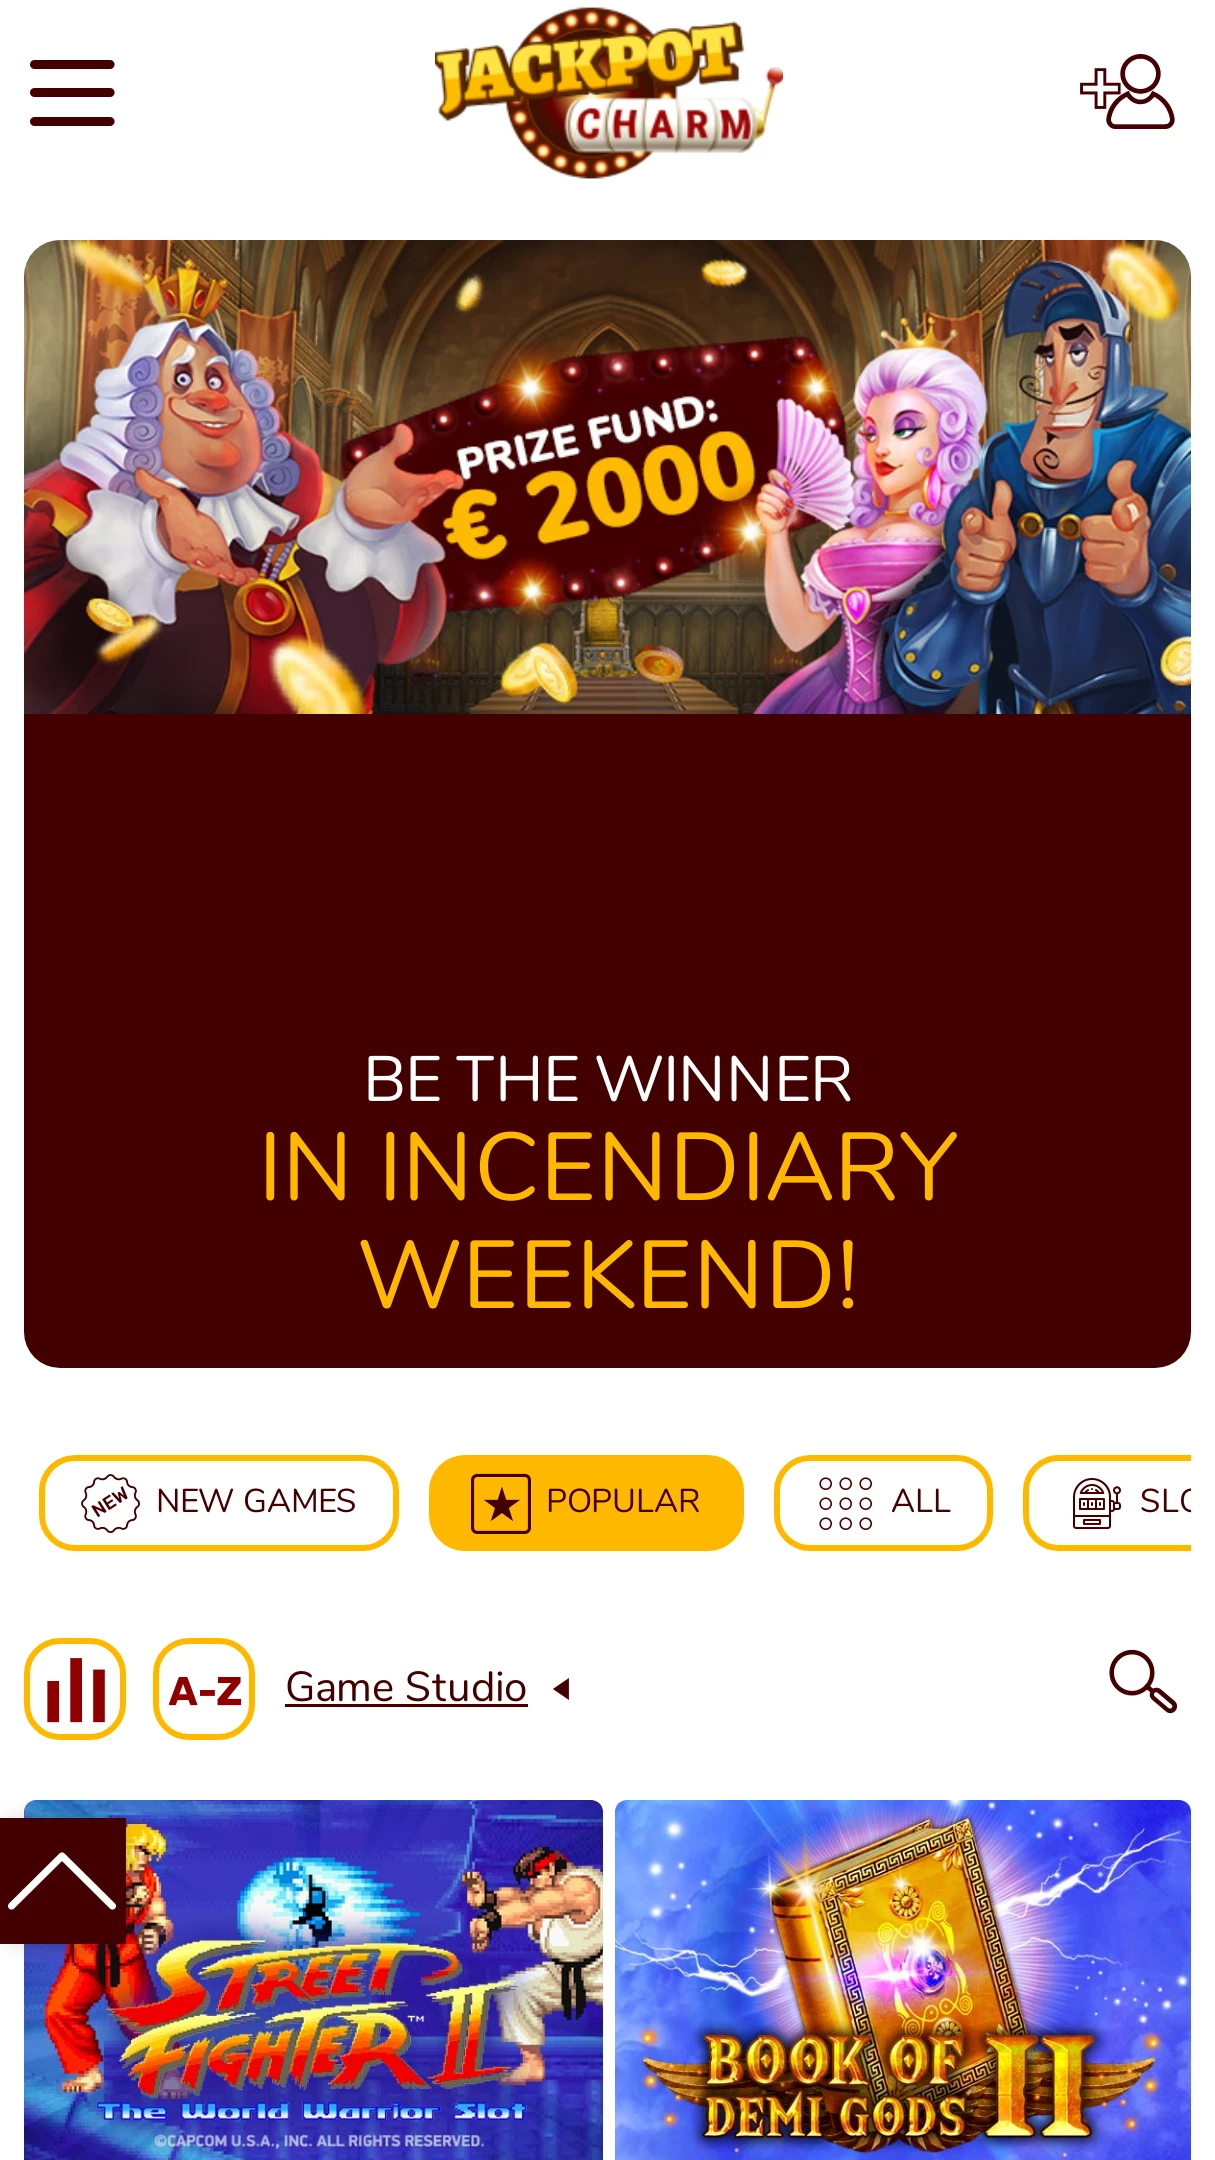 Jackpot Charm mobile casino